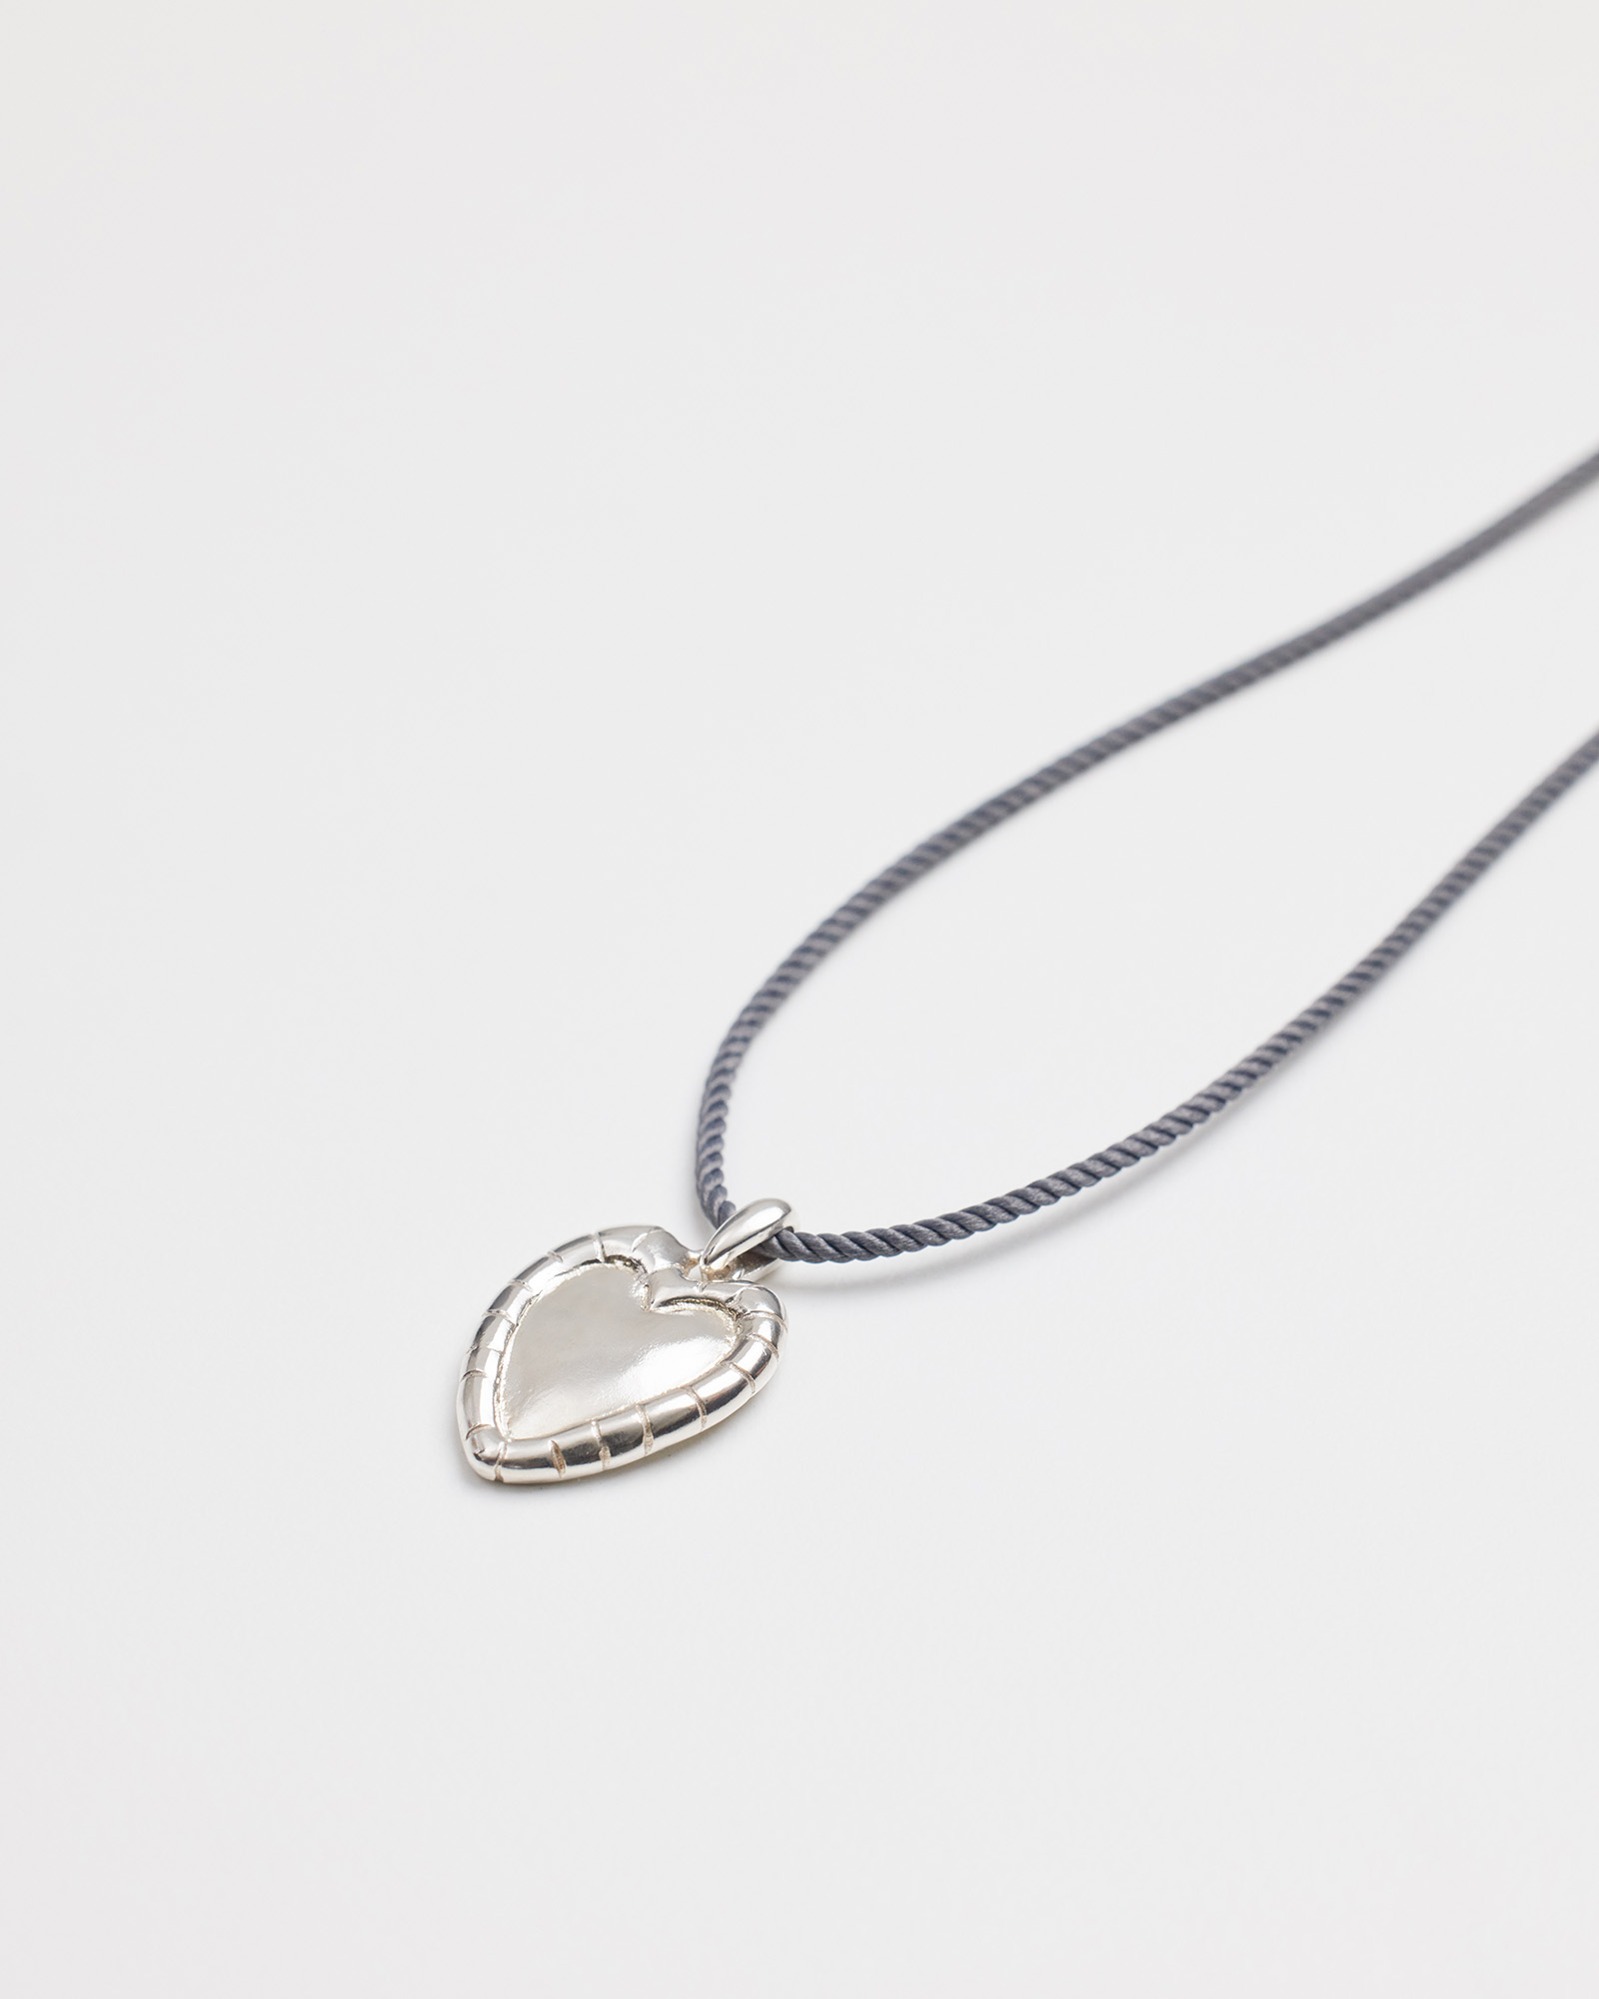 round heart necklace